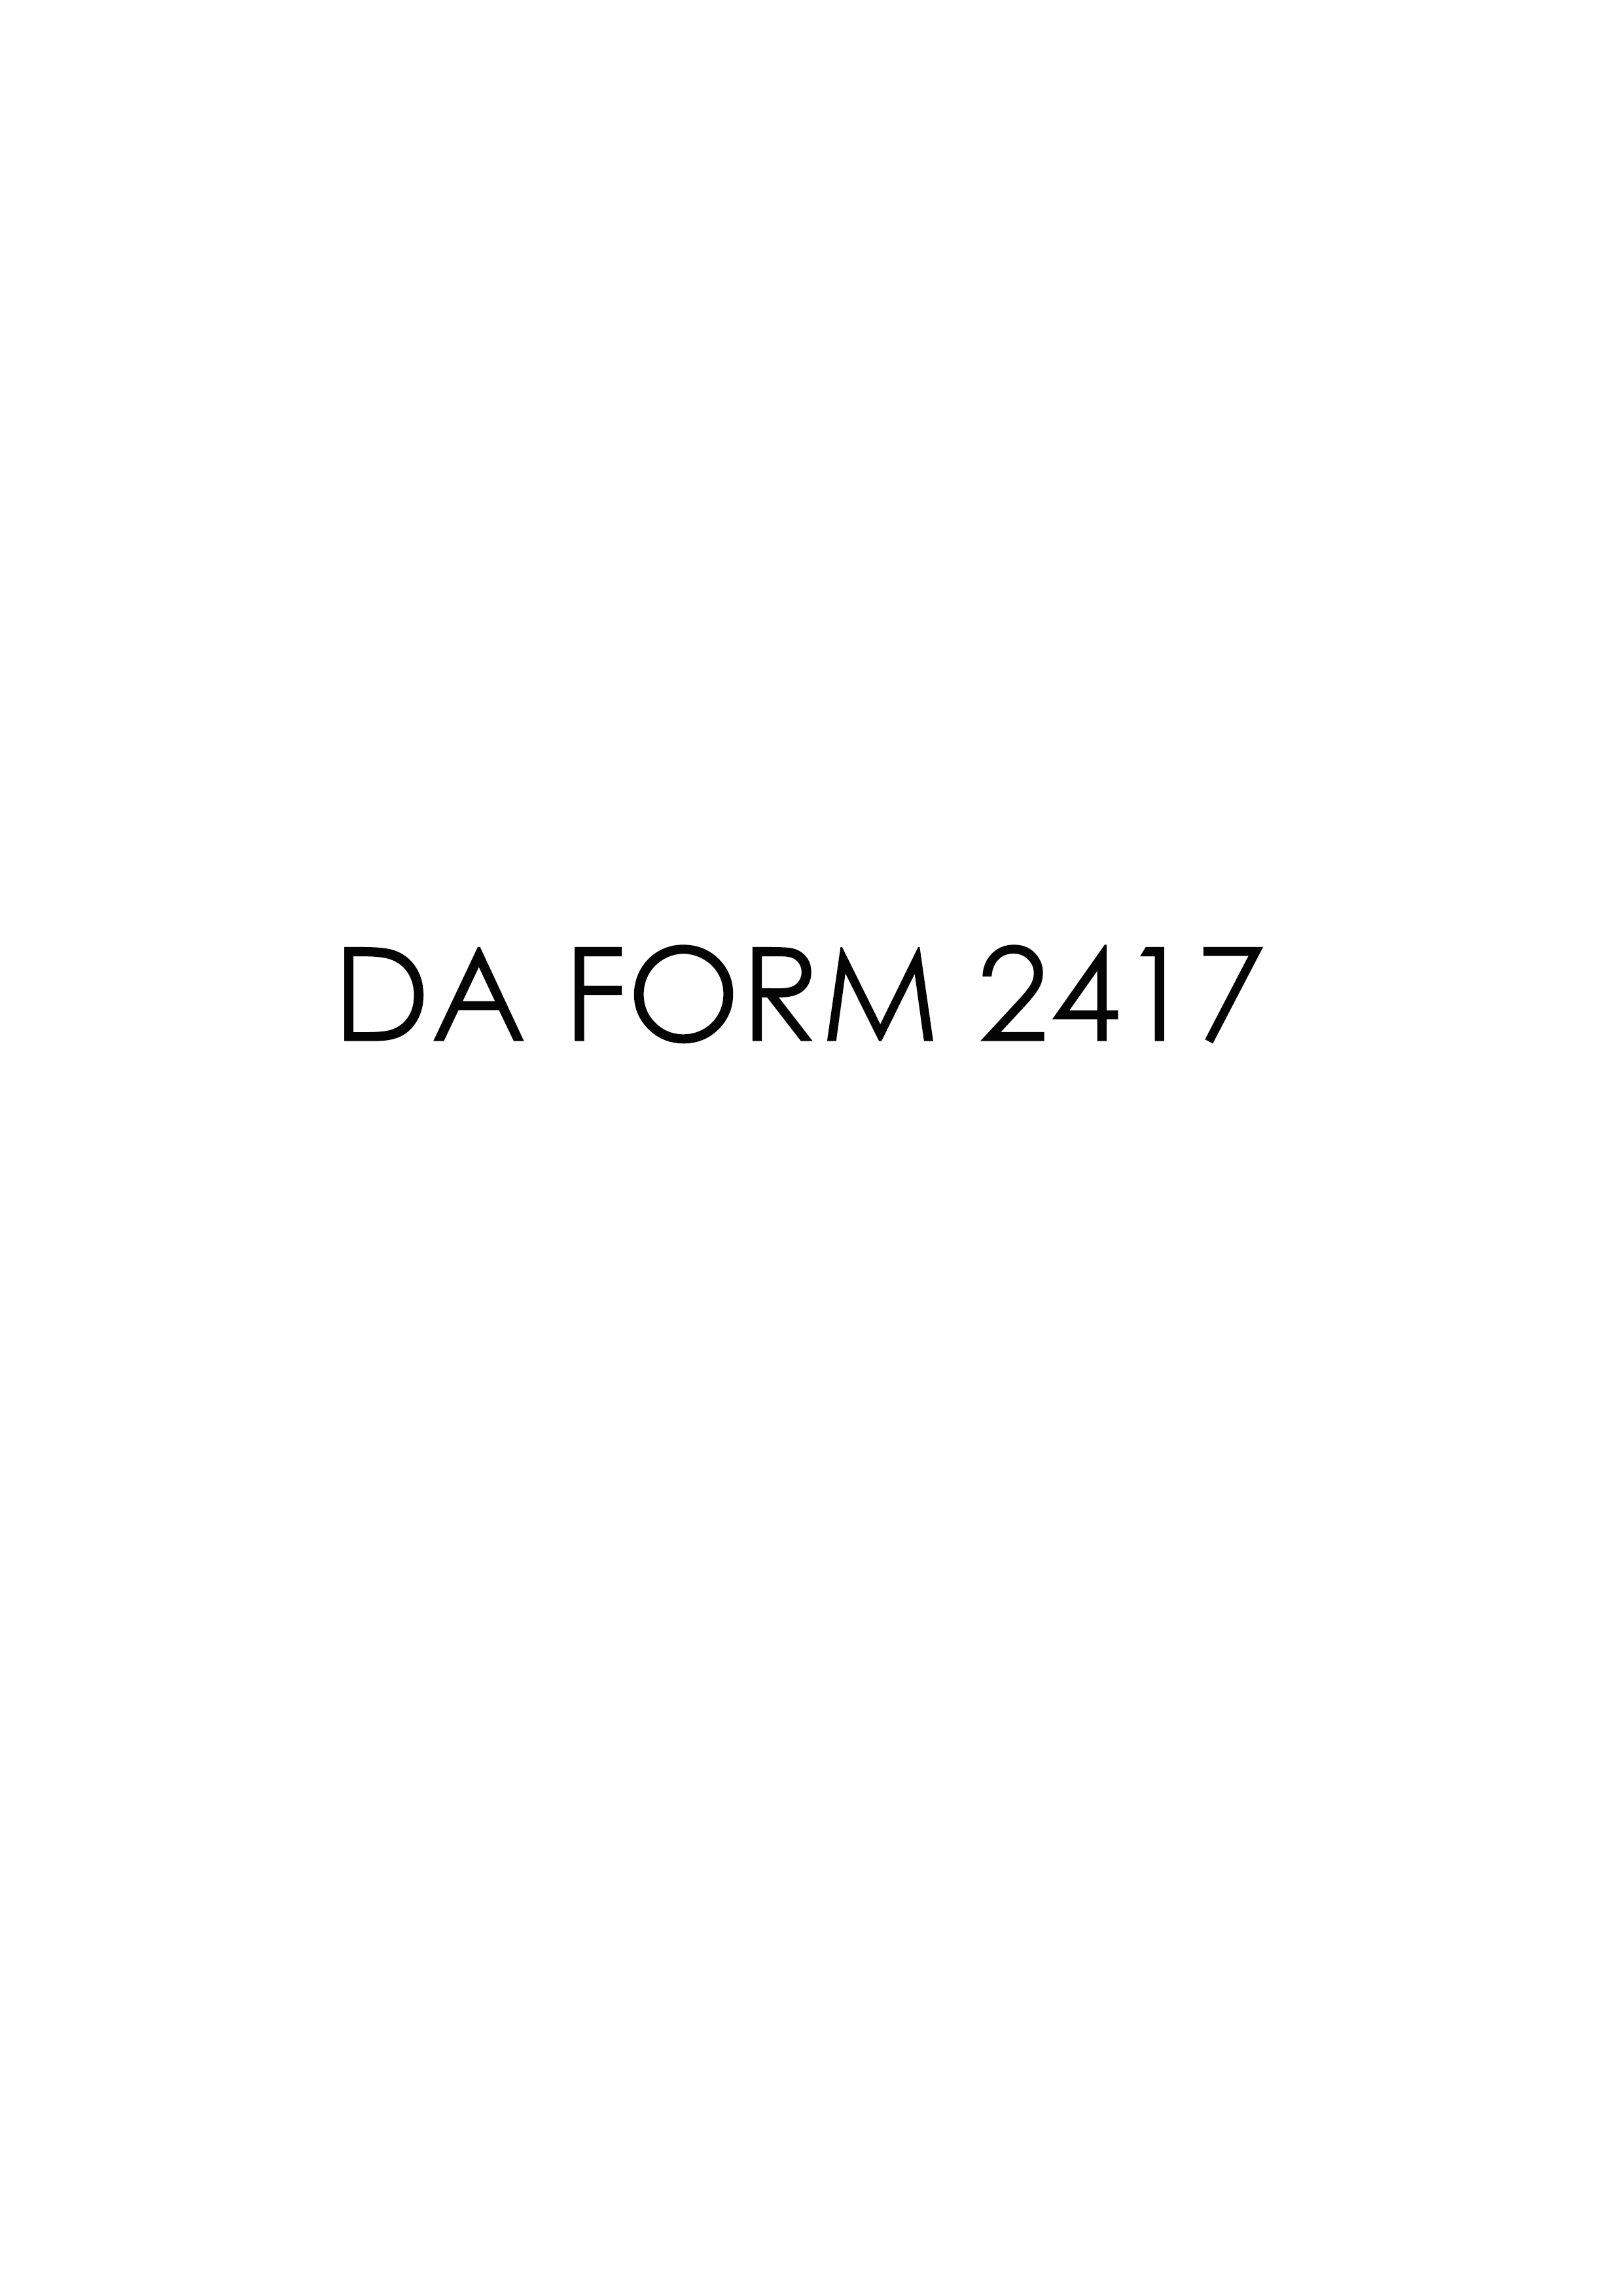 Download da 2417 Form